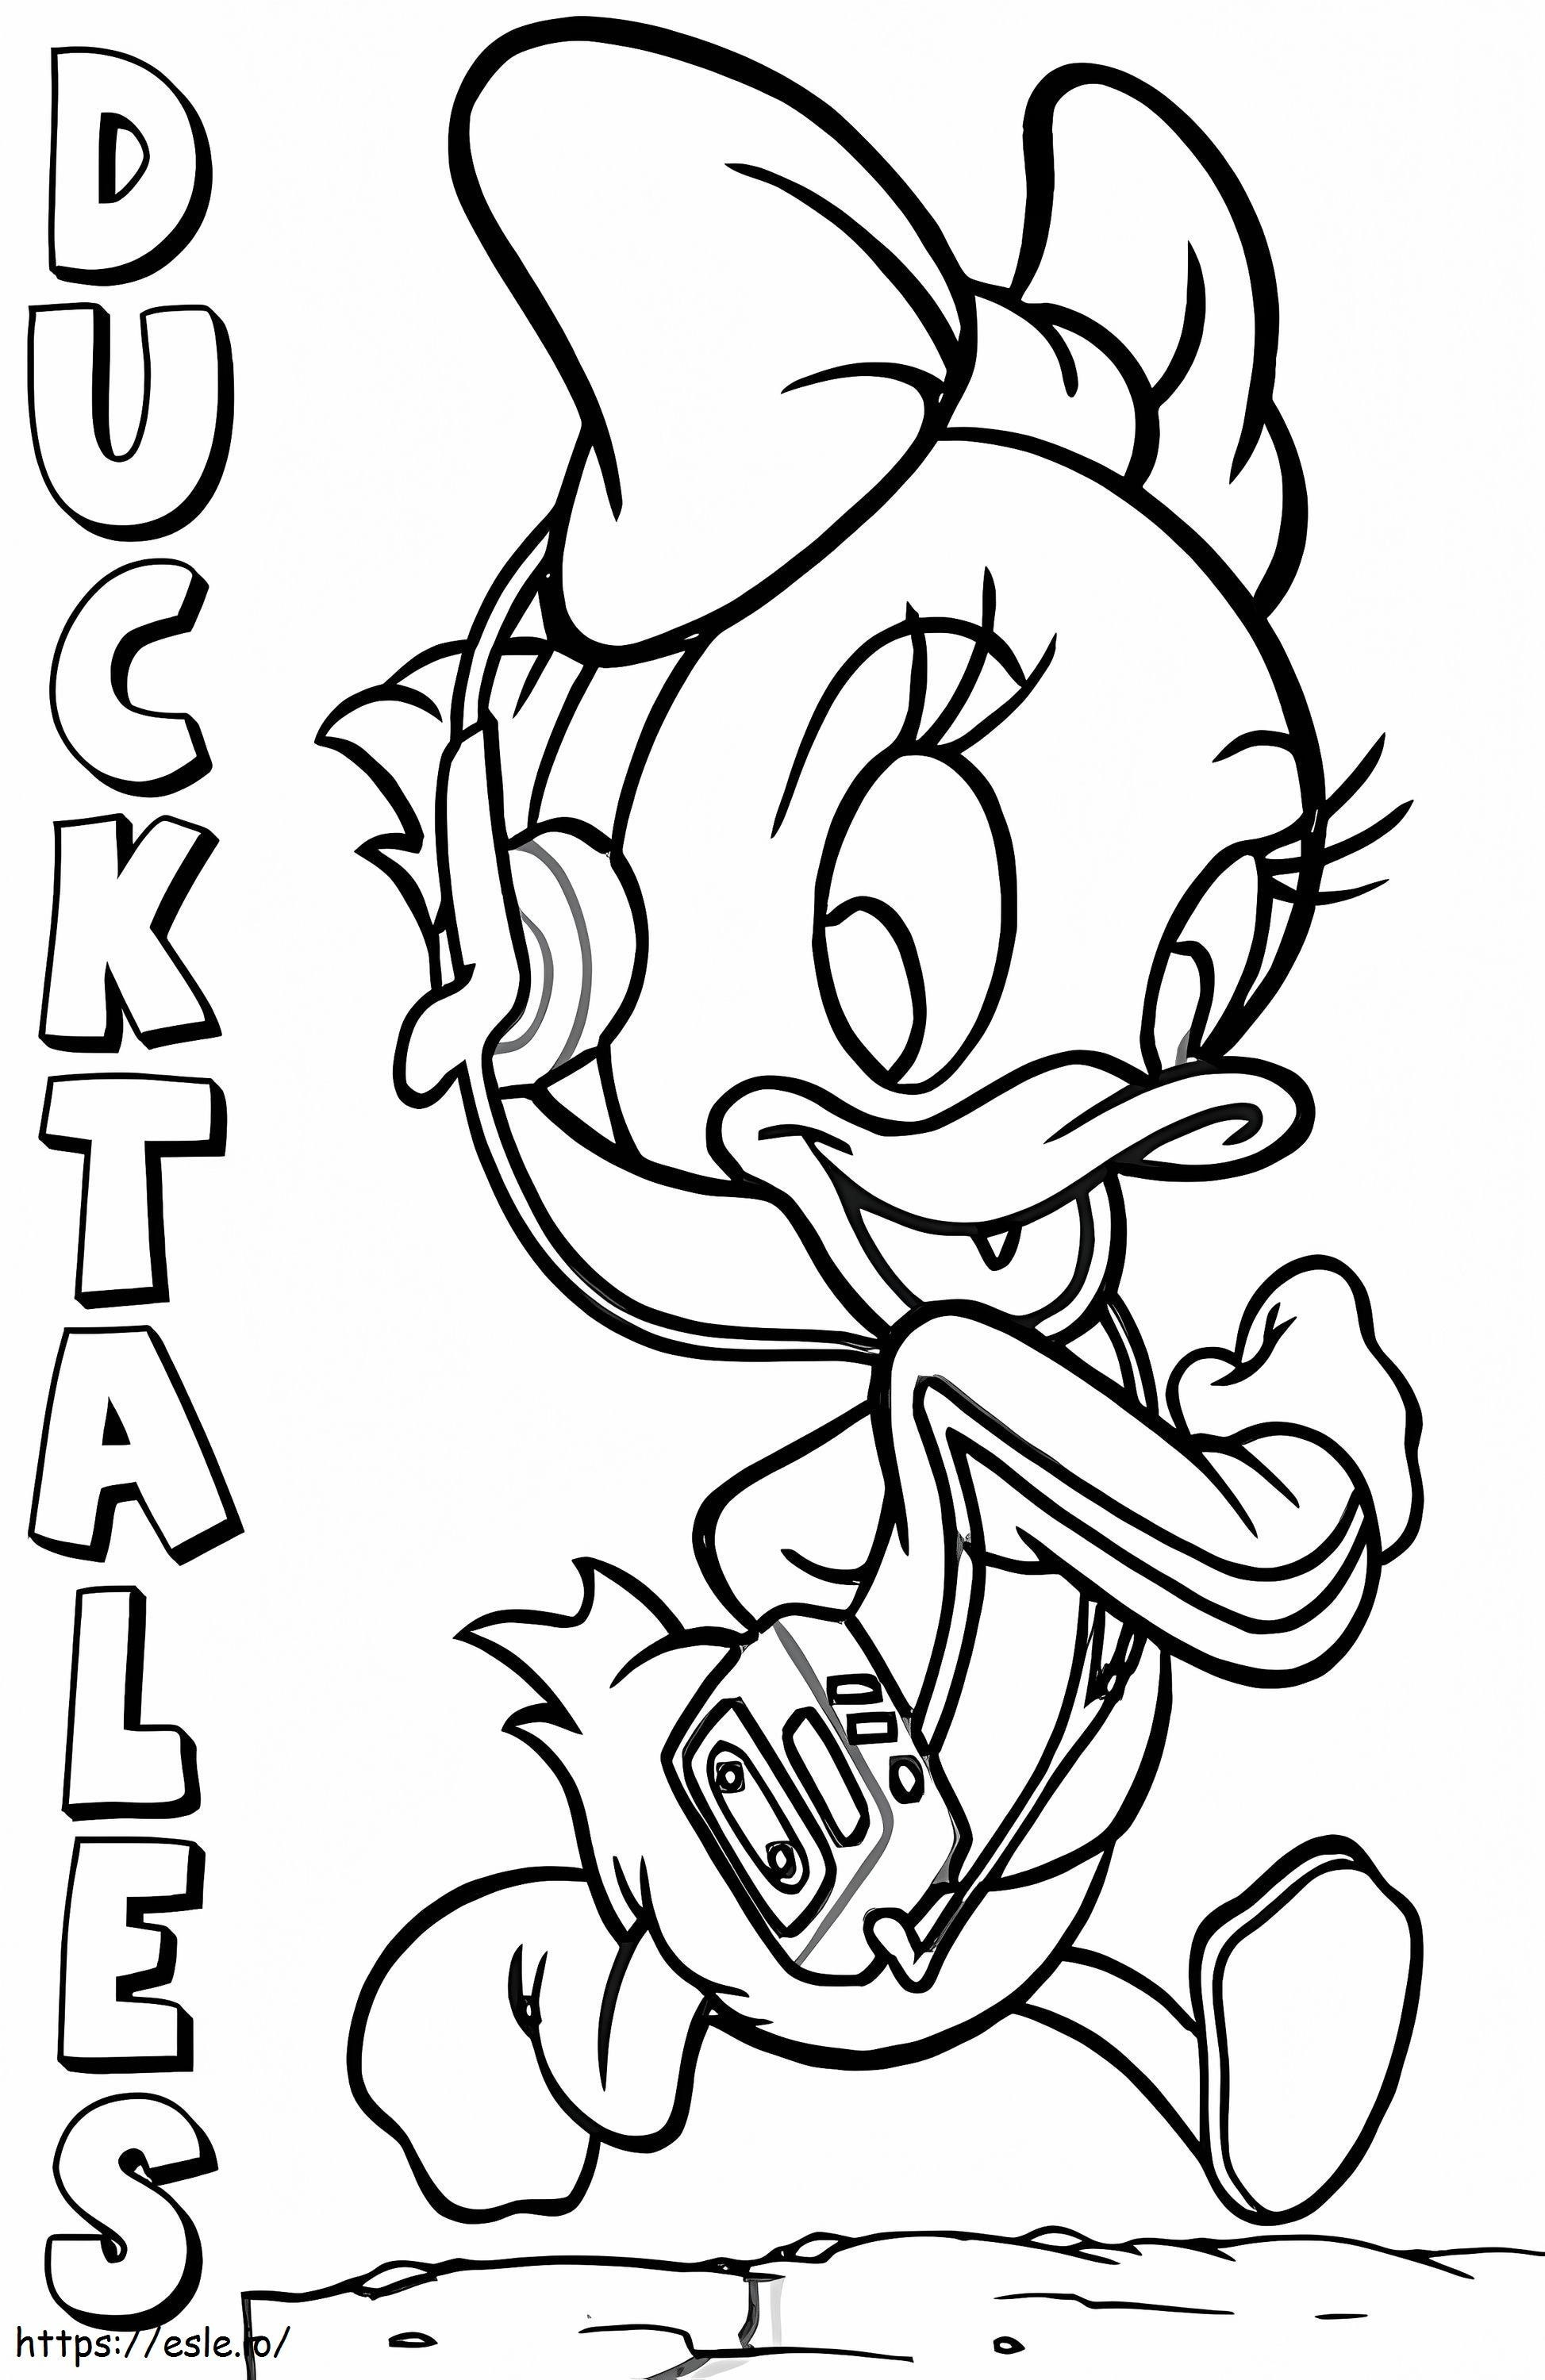 Coloriage Webby Vanderquack dans Ducktales à imprimer dessin